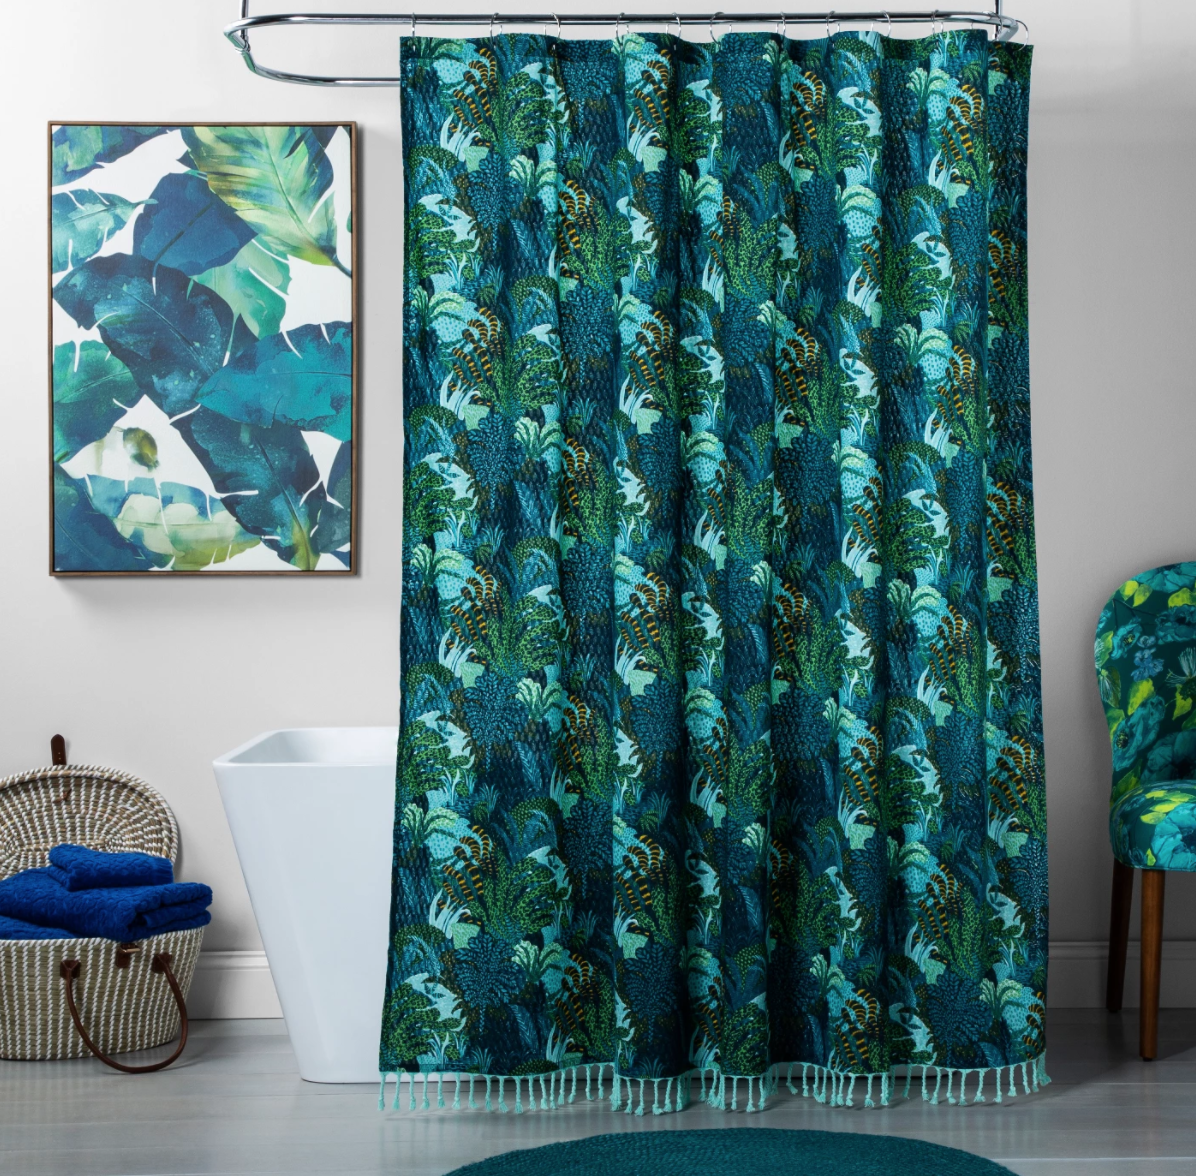 cool shower curtains reddit